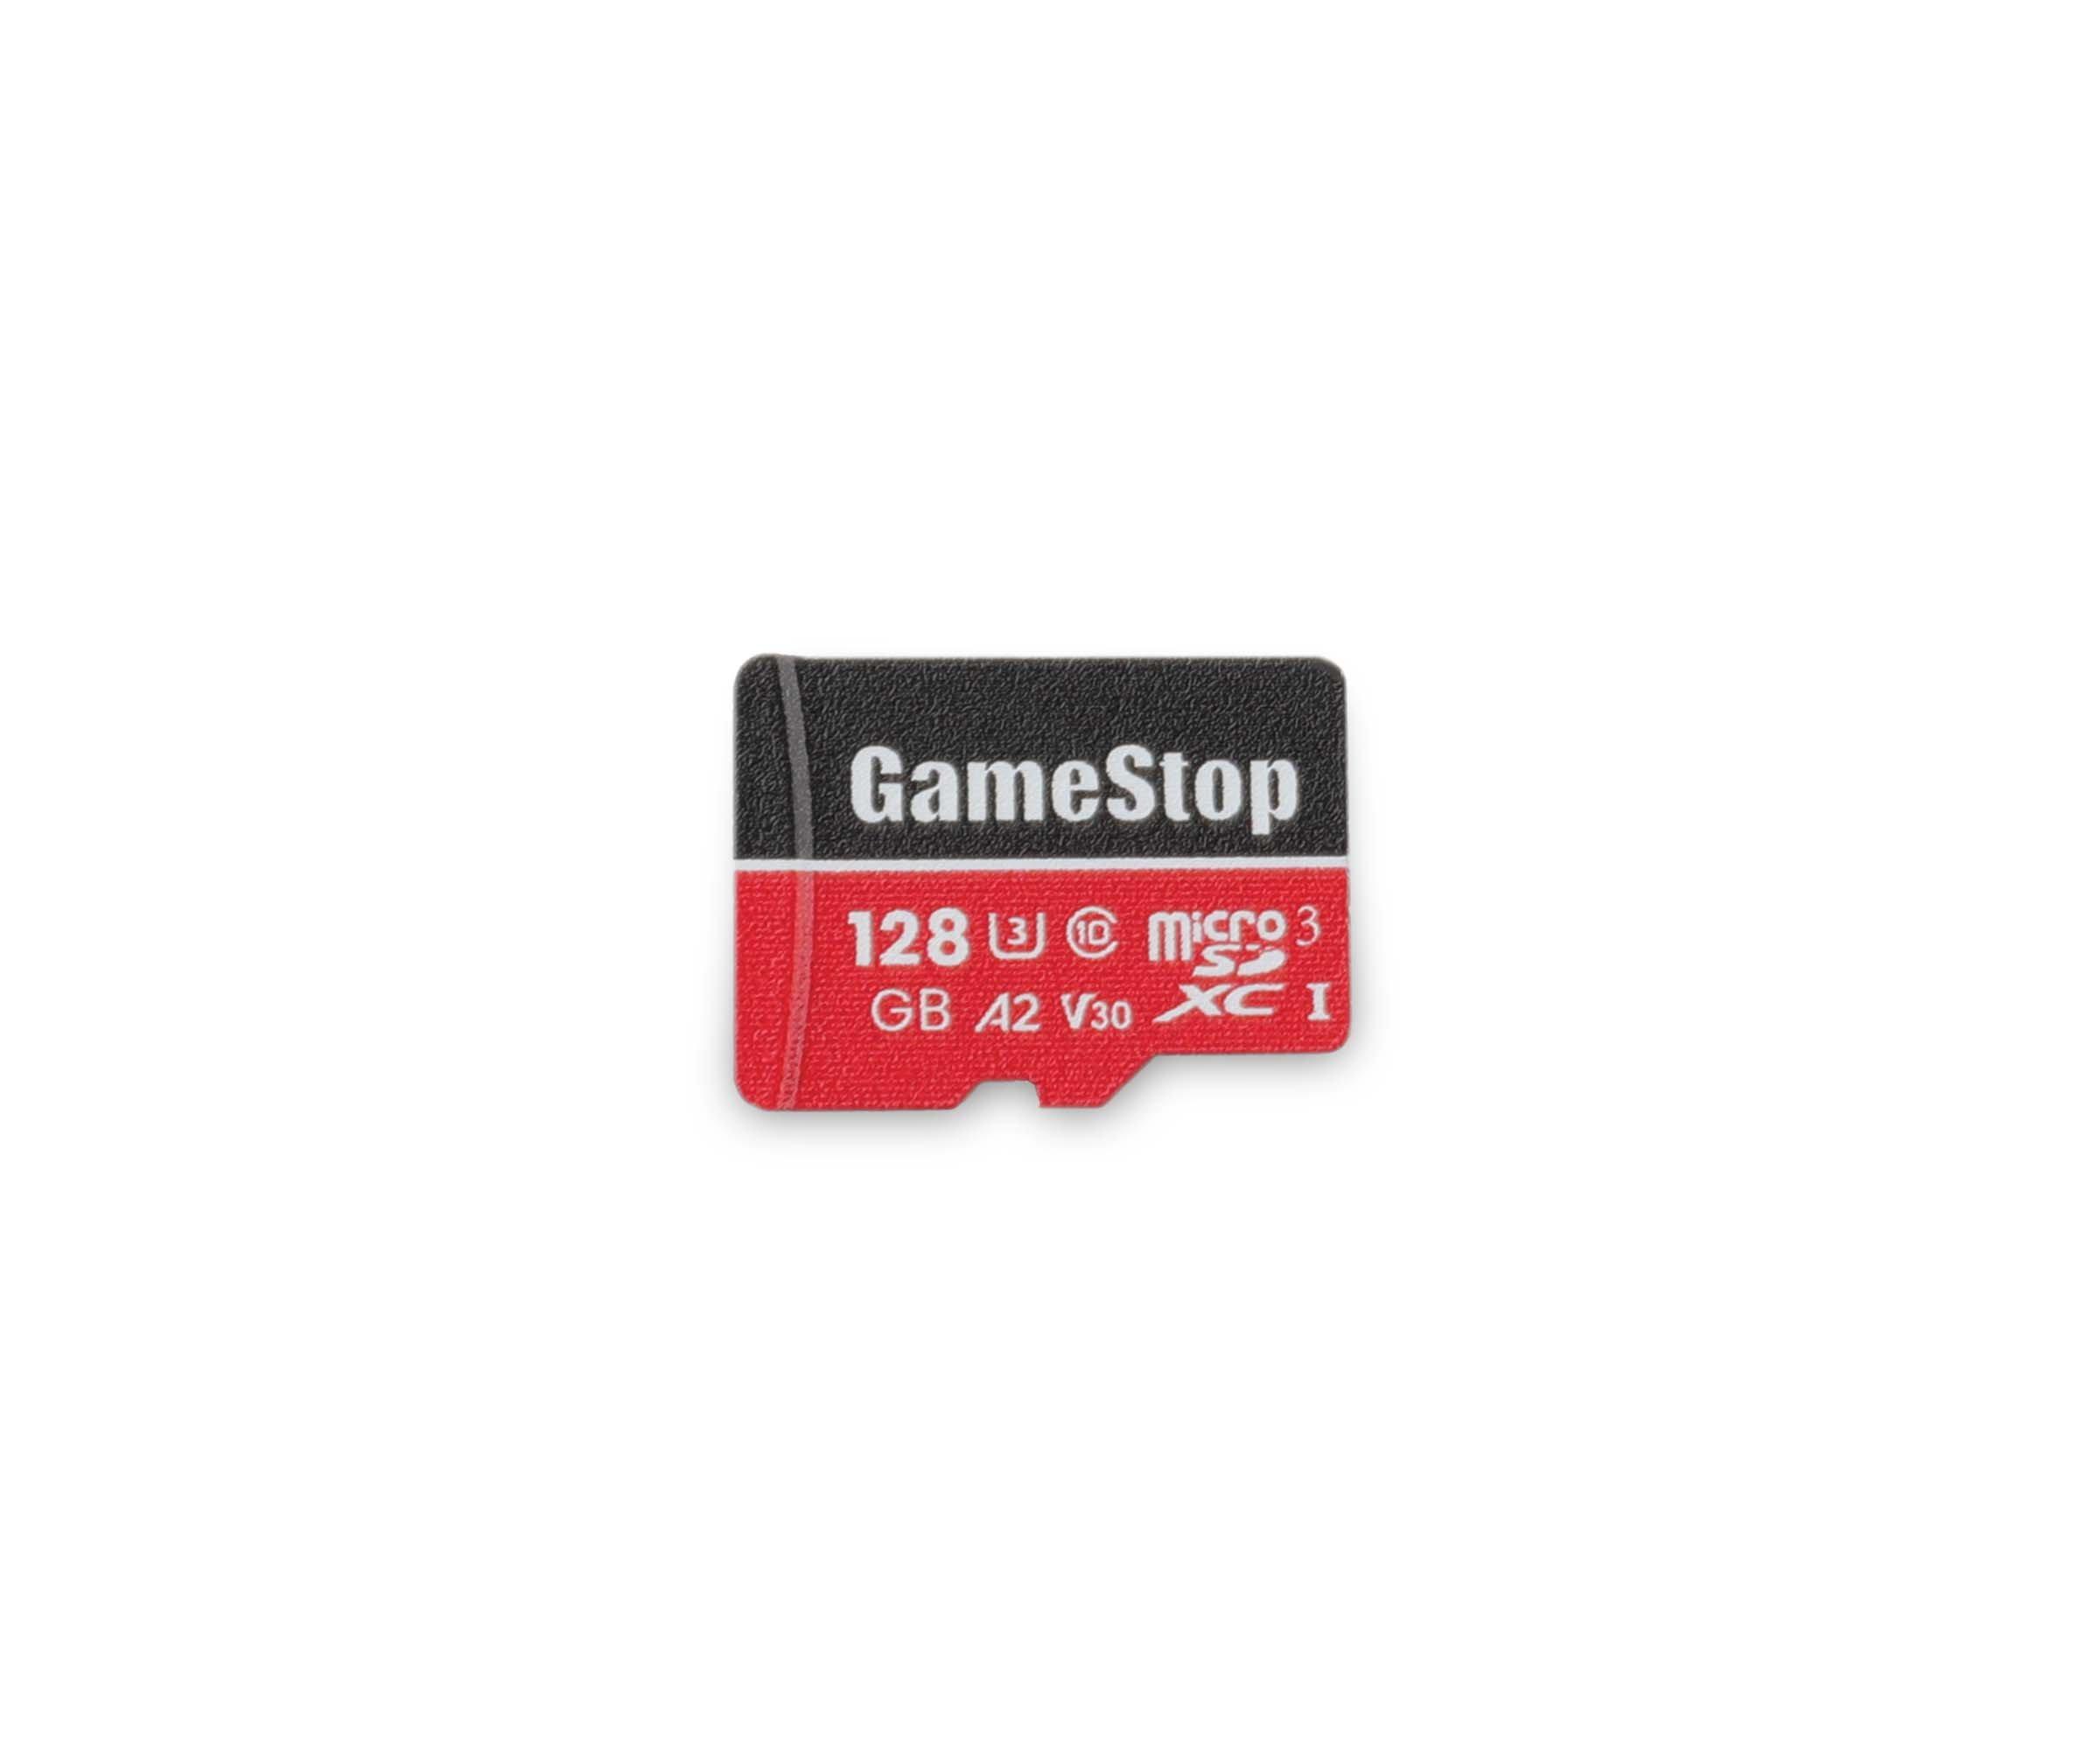 GameStop 64GB U3 Micro SD Card with Adapter